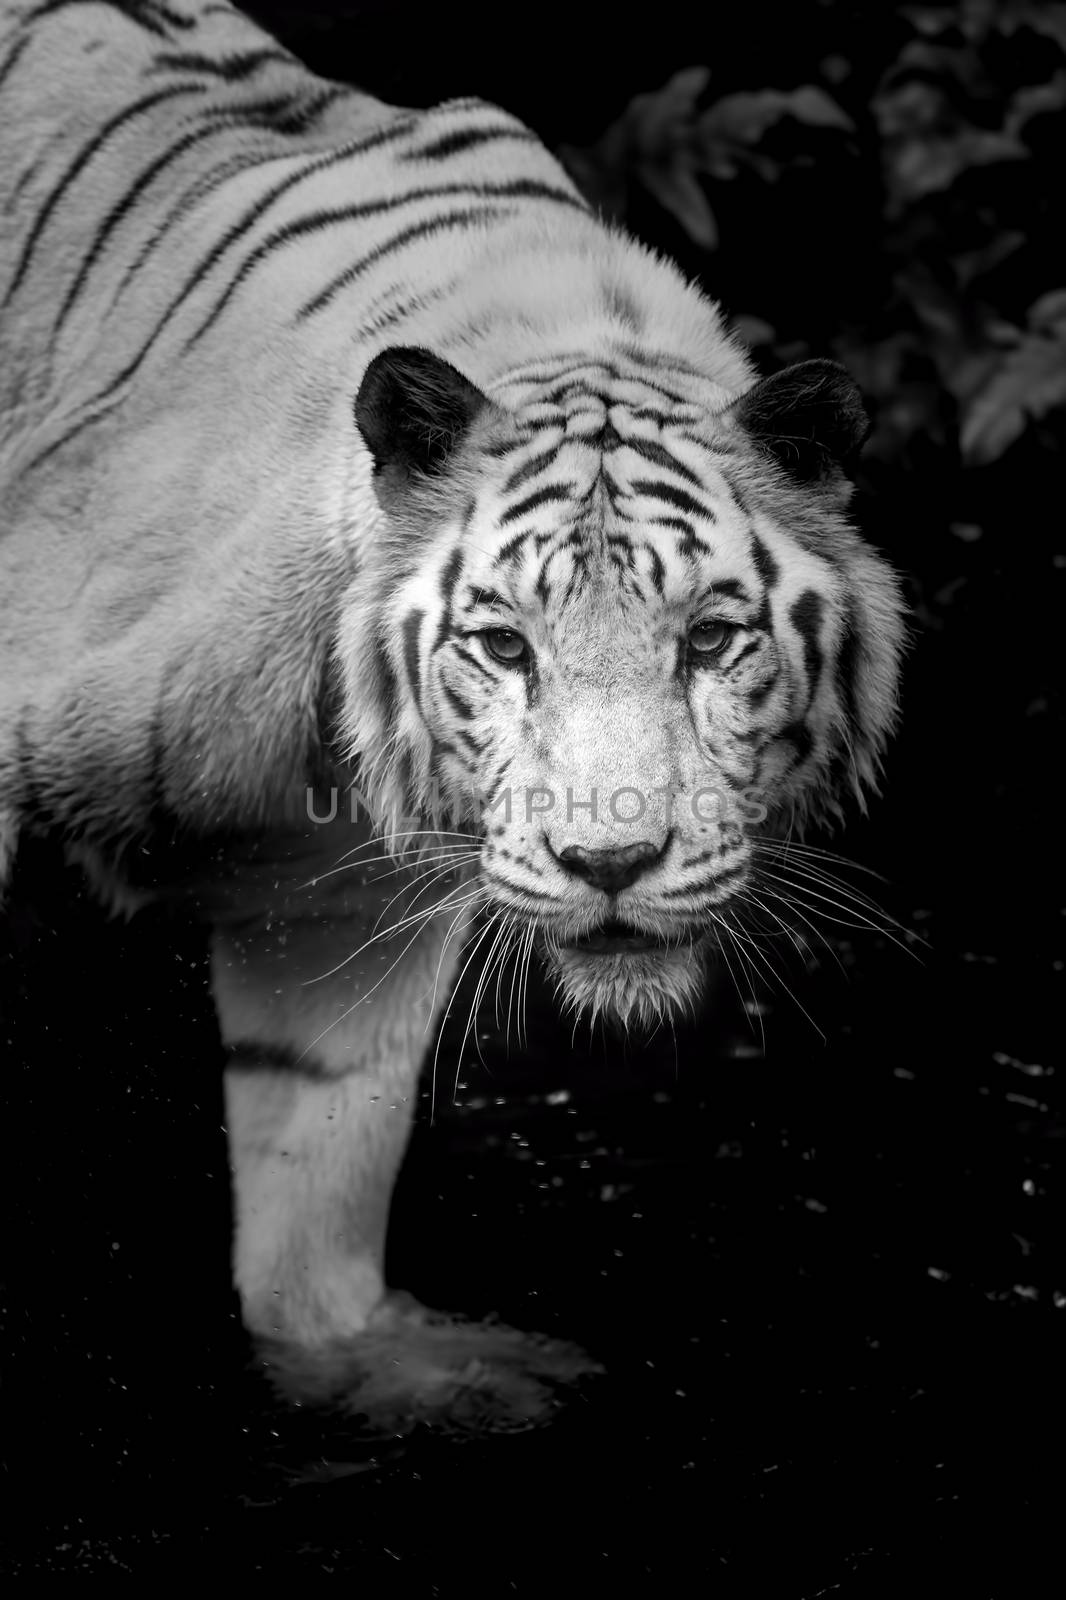 Black and white portrait of a White Tiger